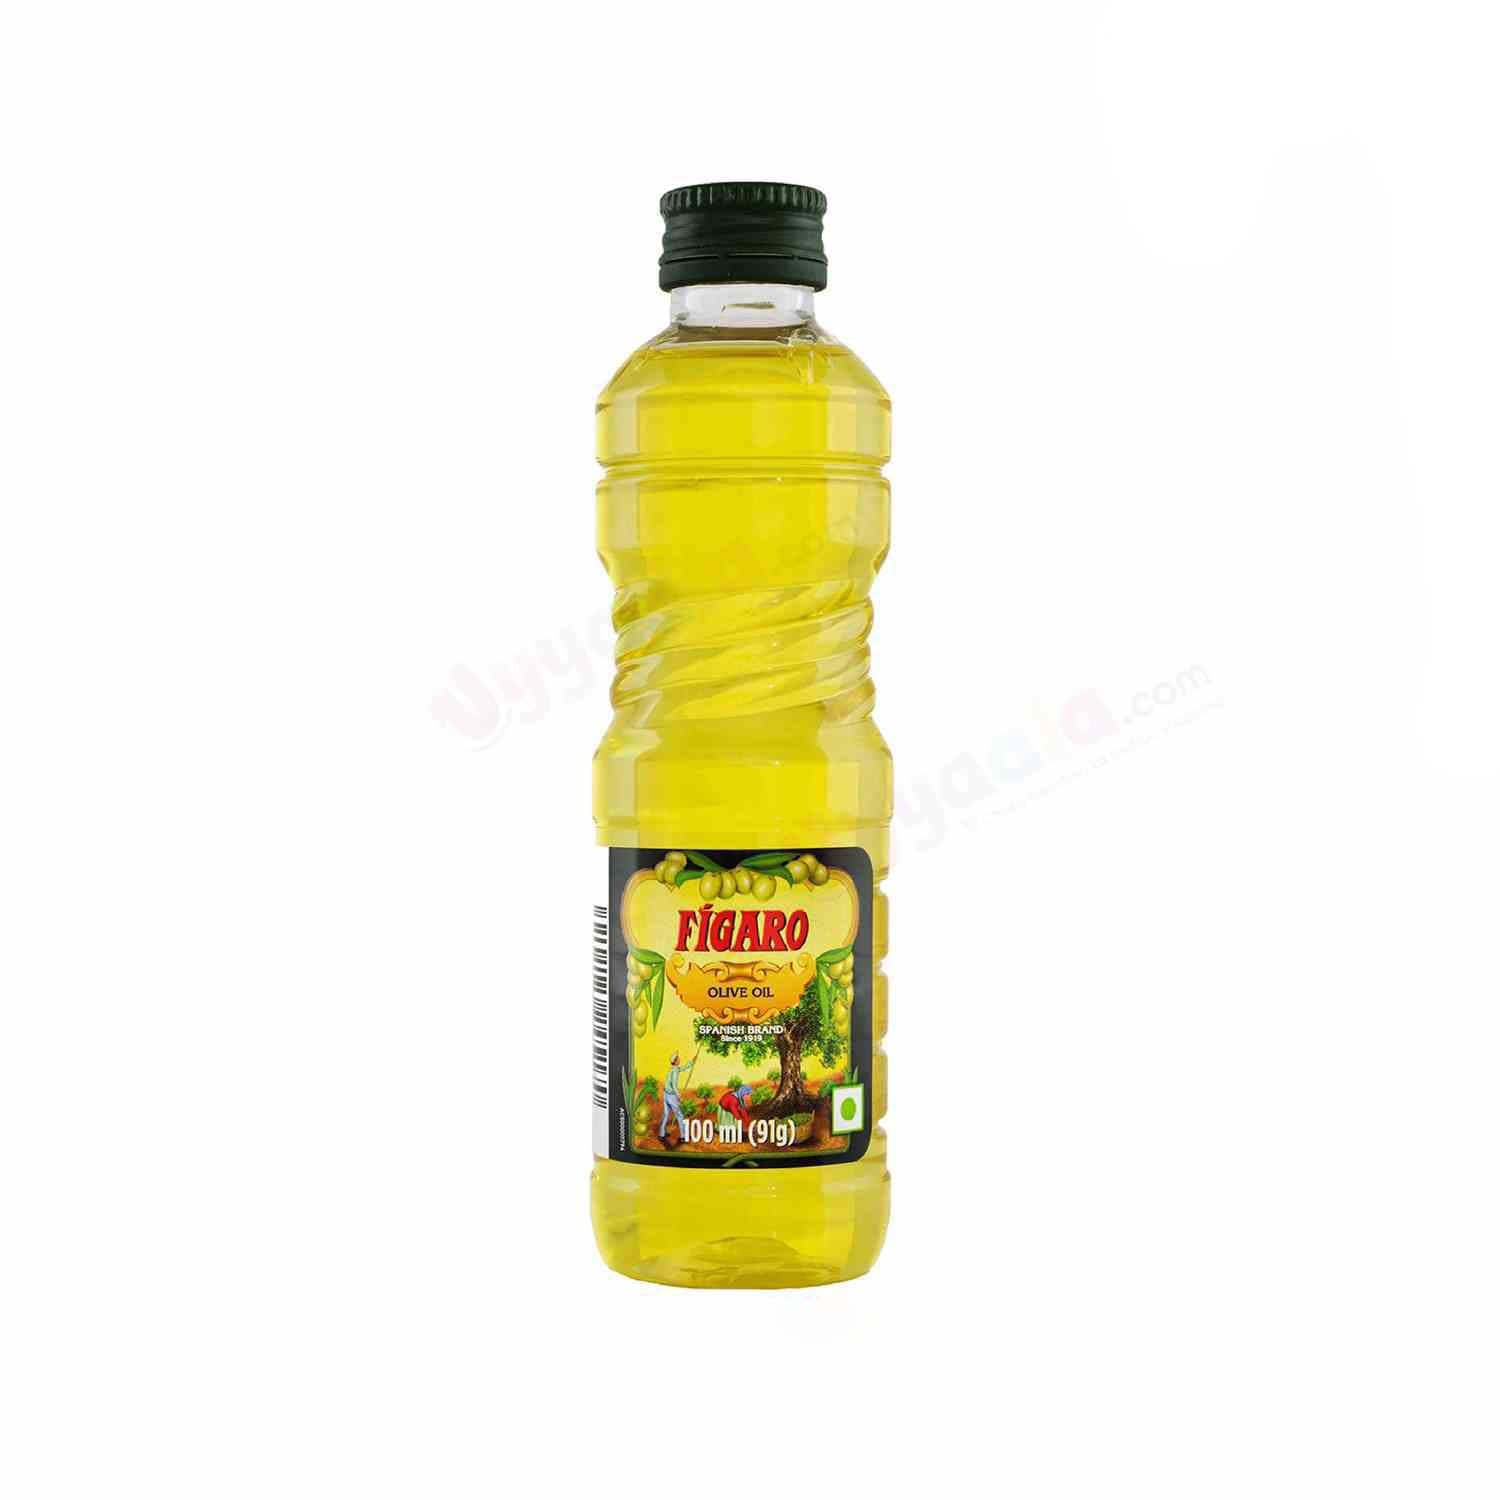 FIGARO Olive Oil Spanish Brand